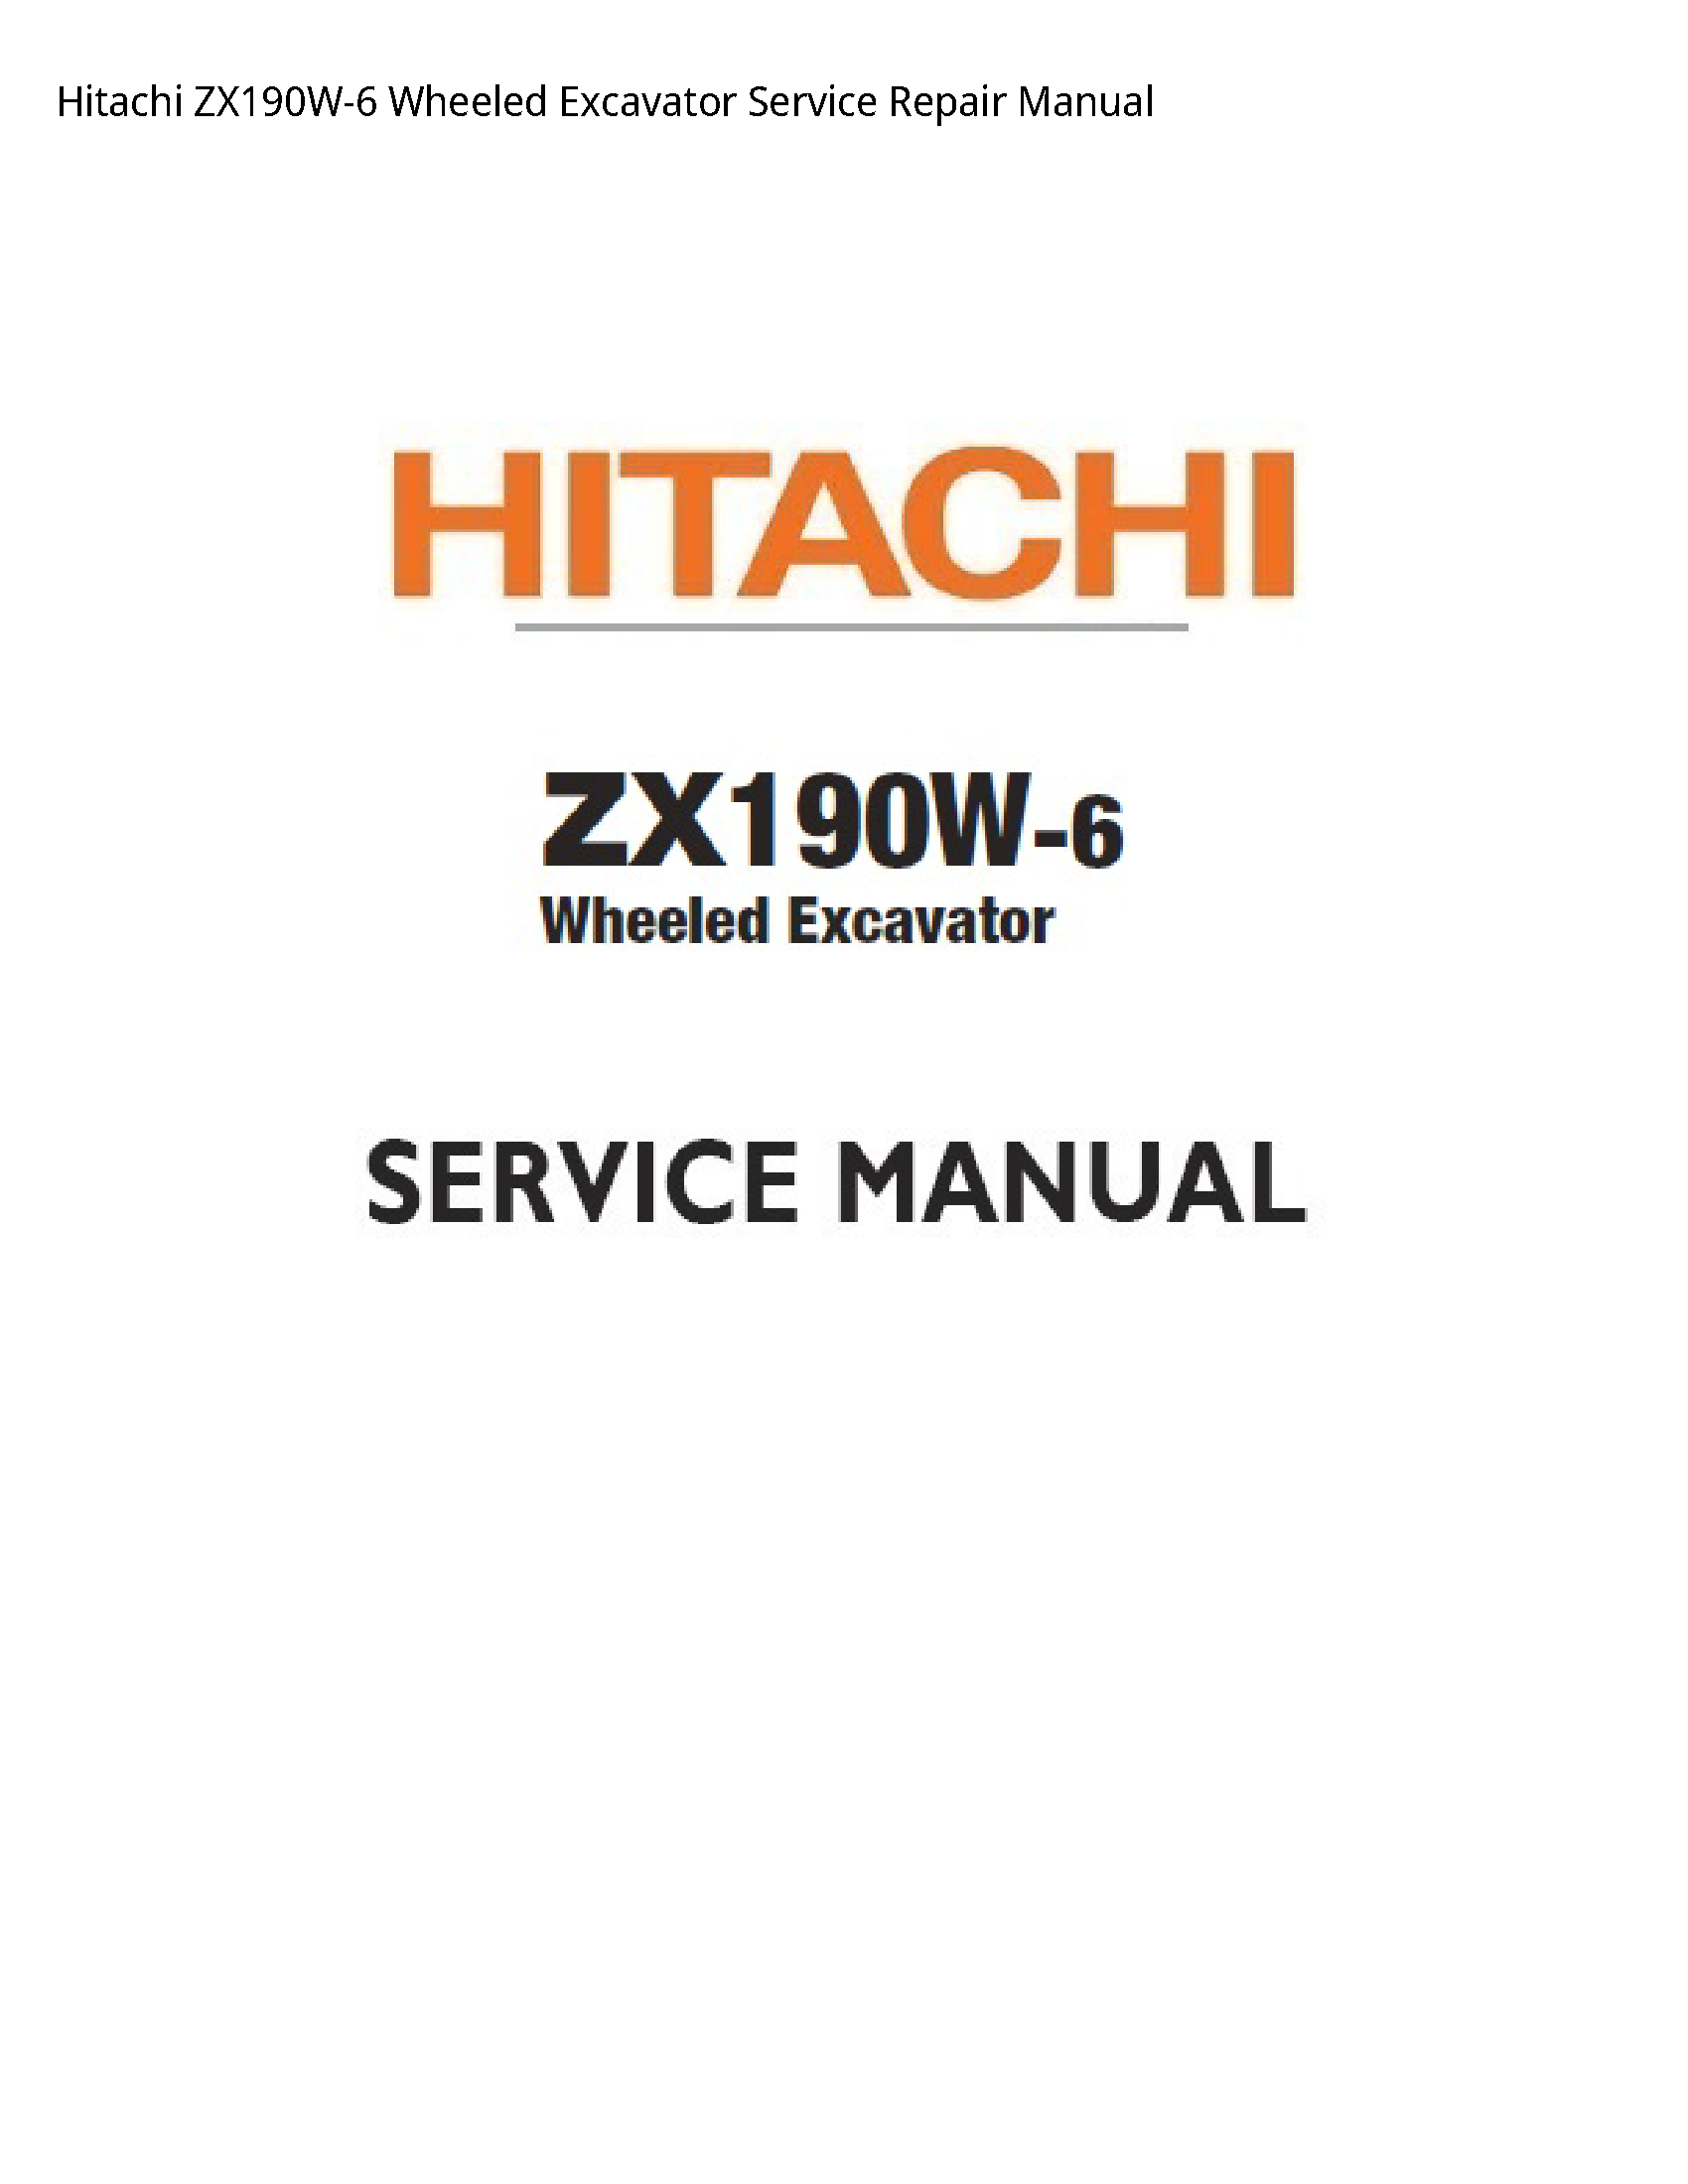 Hitachi ZX190W-6 Wheeled Excavator manual